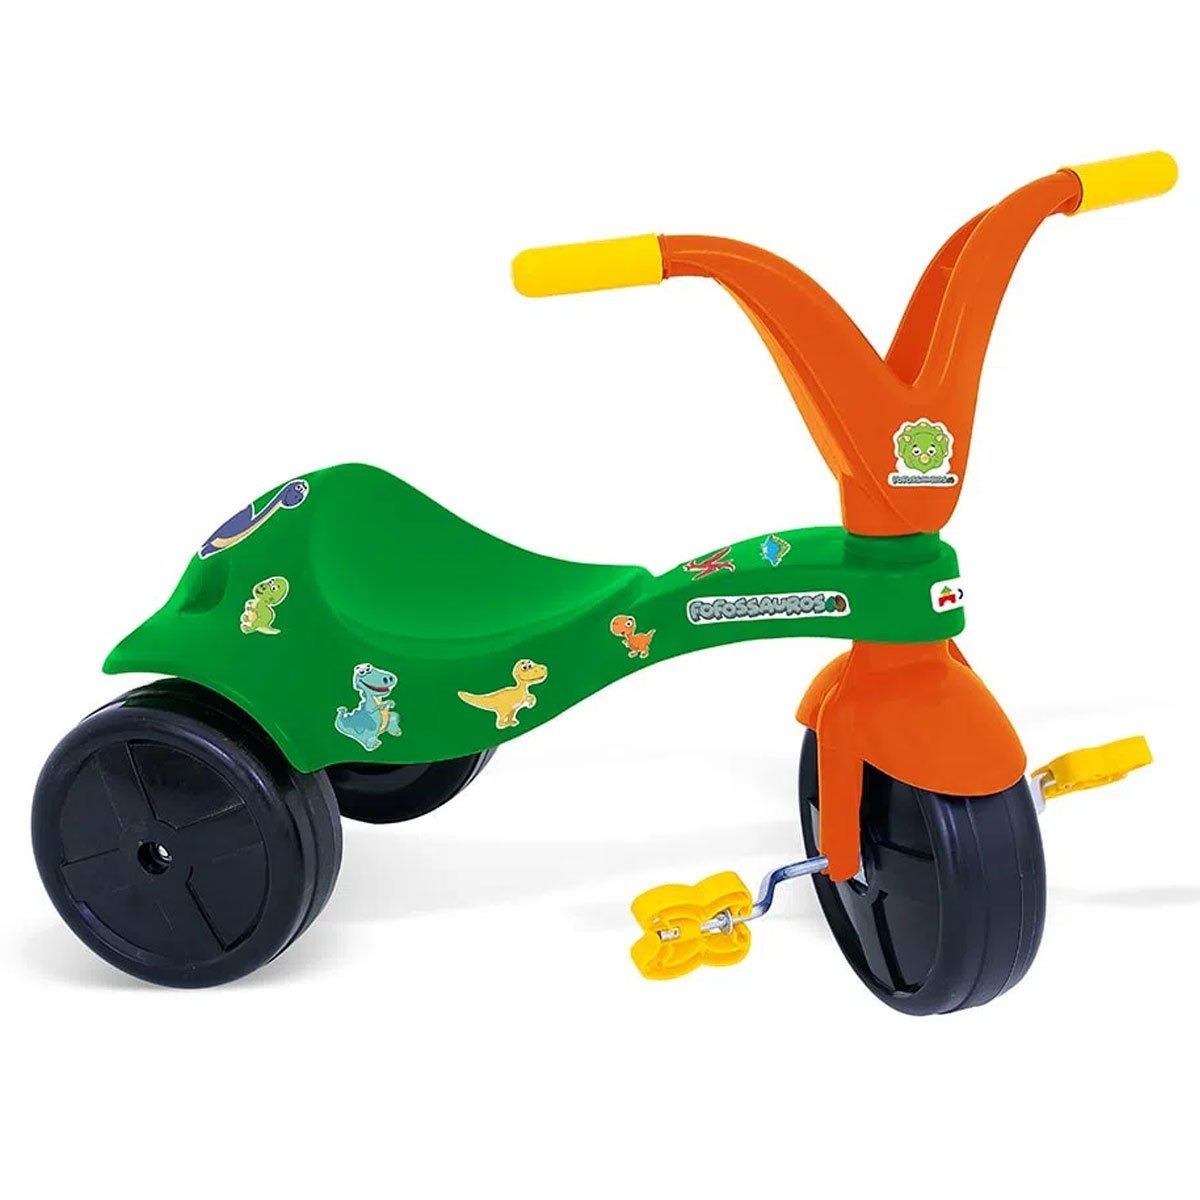 Triciclo Infantil Black Racer Green Com Empurrador Xalingo - xalingo